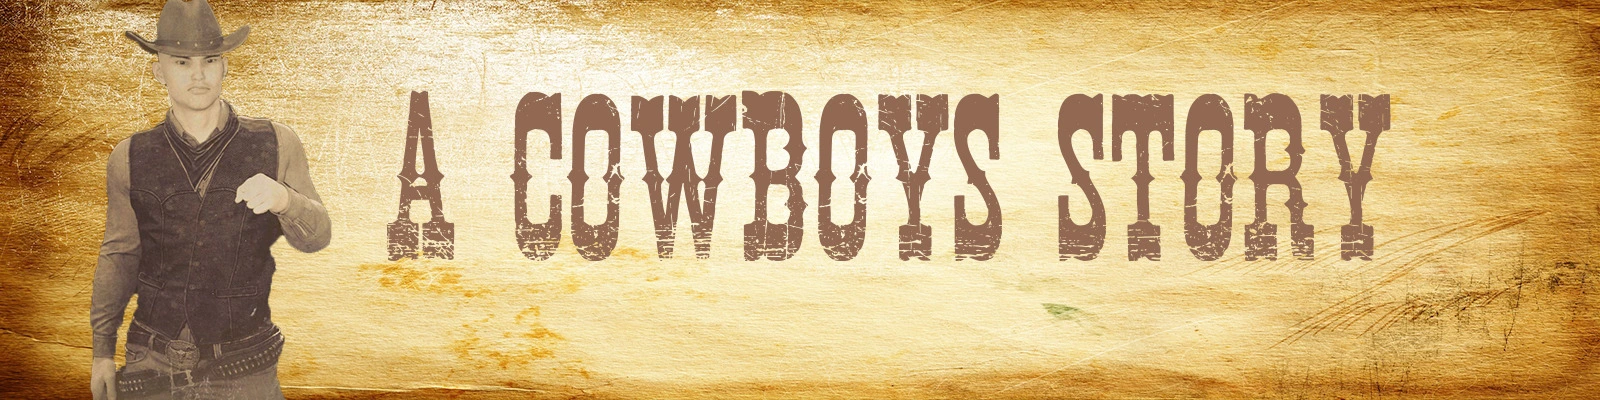 A Cowboys Story [v0.4b] main image